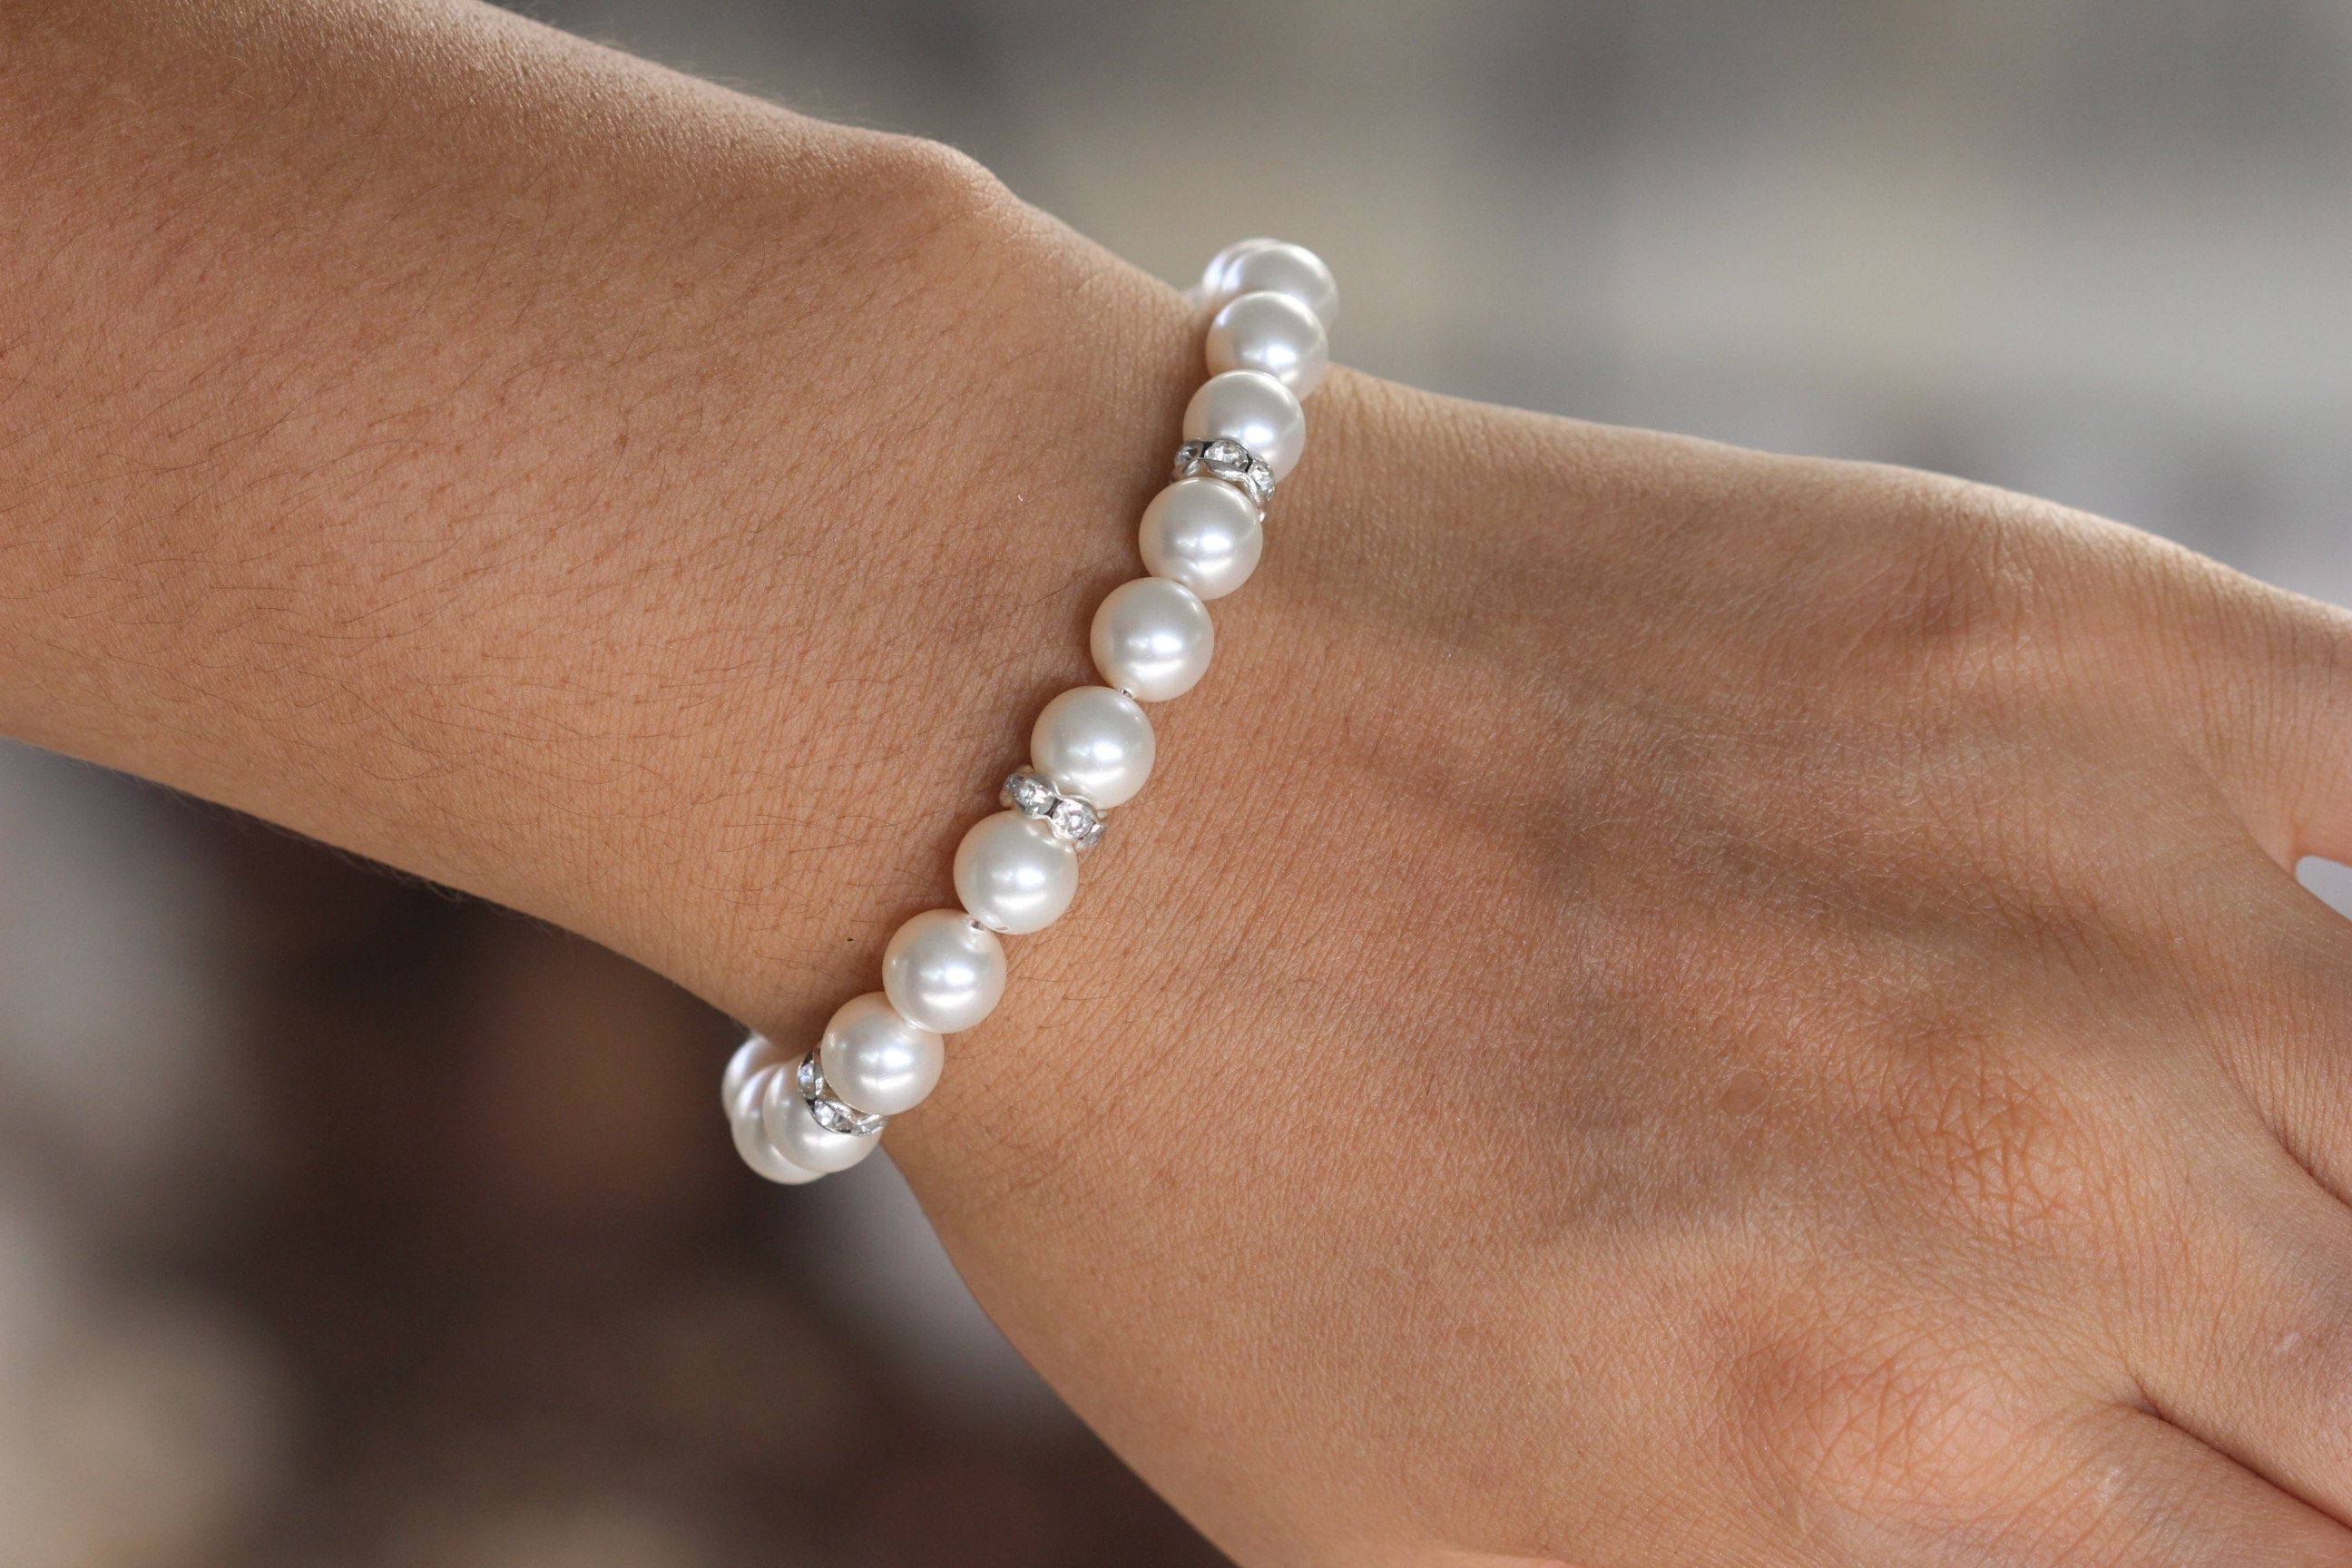 14mm Pearl Bracelet, Big Pearl Bracelets, Pearls Elastic Bracelet, Ivory Pearl Beaded Bracelet, Statement Bracelet, Bridesmaid Gift